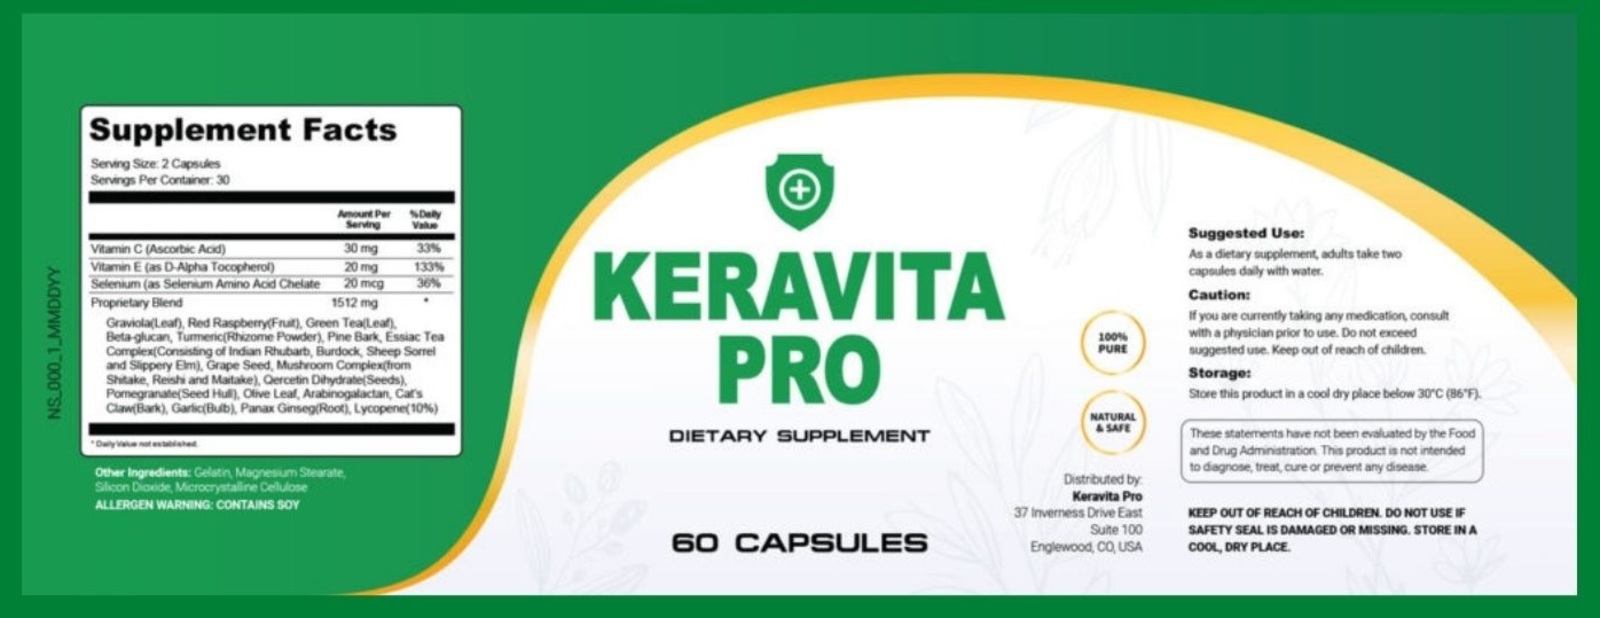 Keravita Pro ingredients list